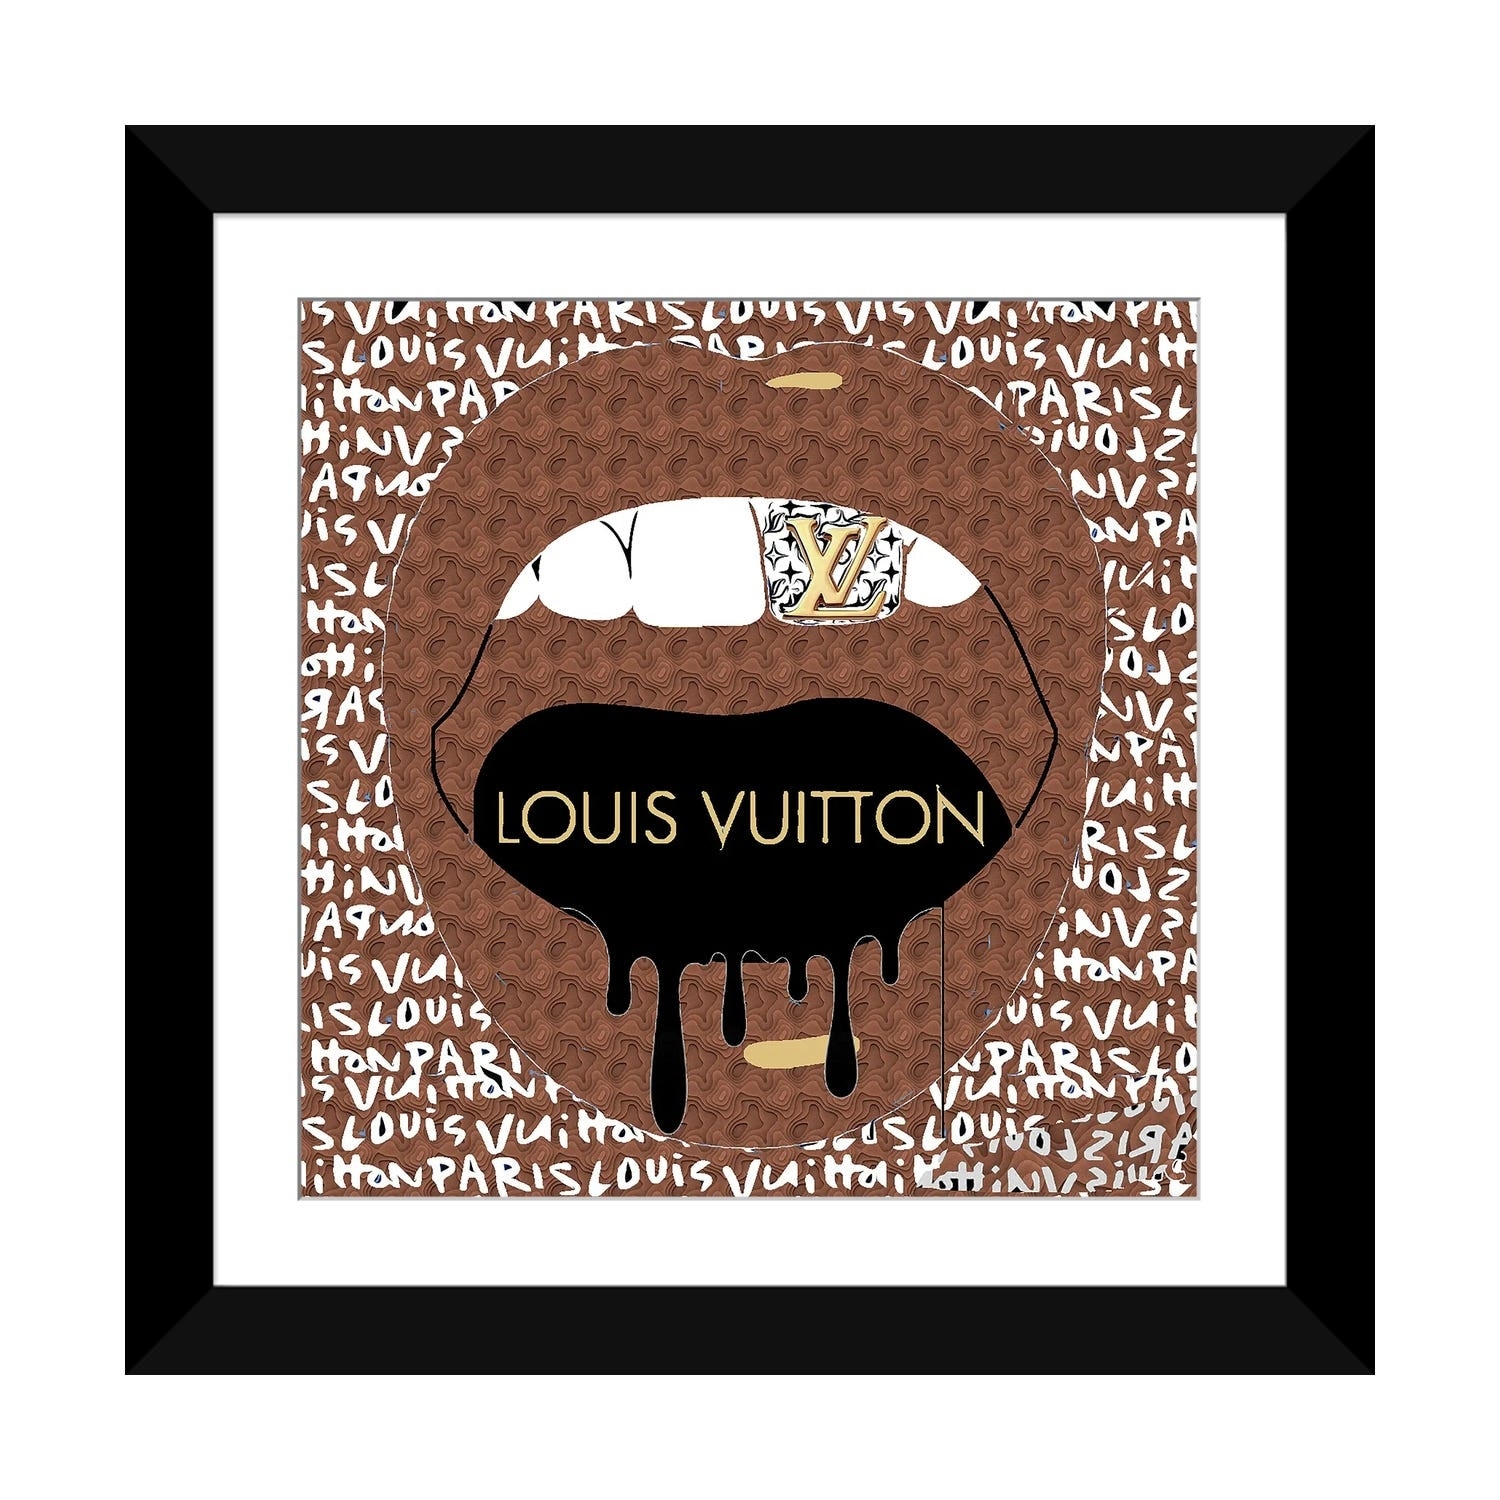 iCanvas Louis Vuitton Abstract Art by Julie Schreiber - On Sale